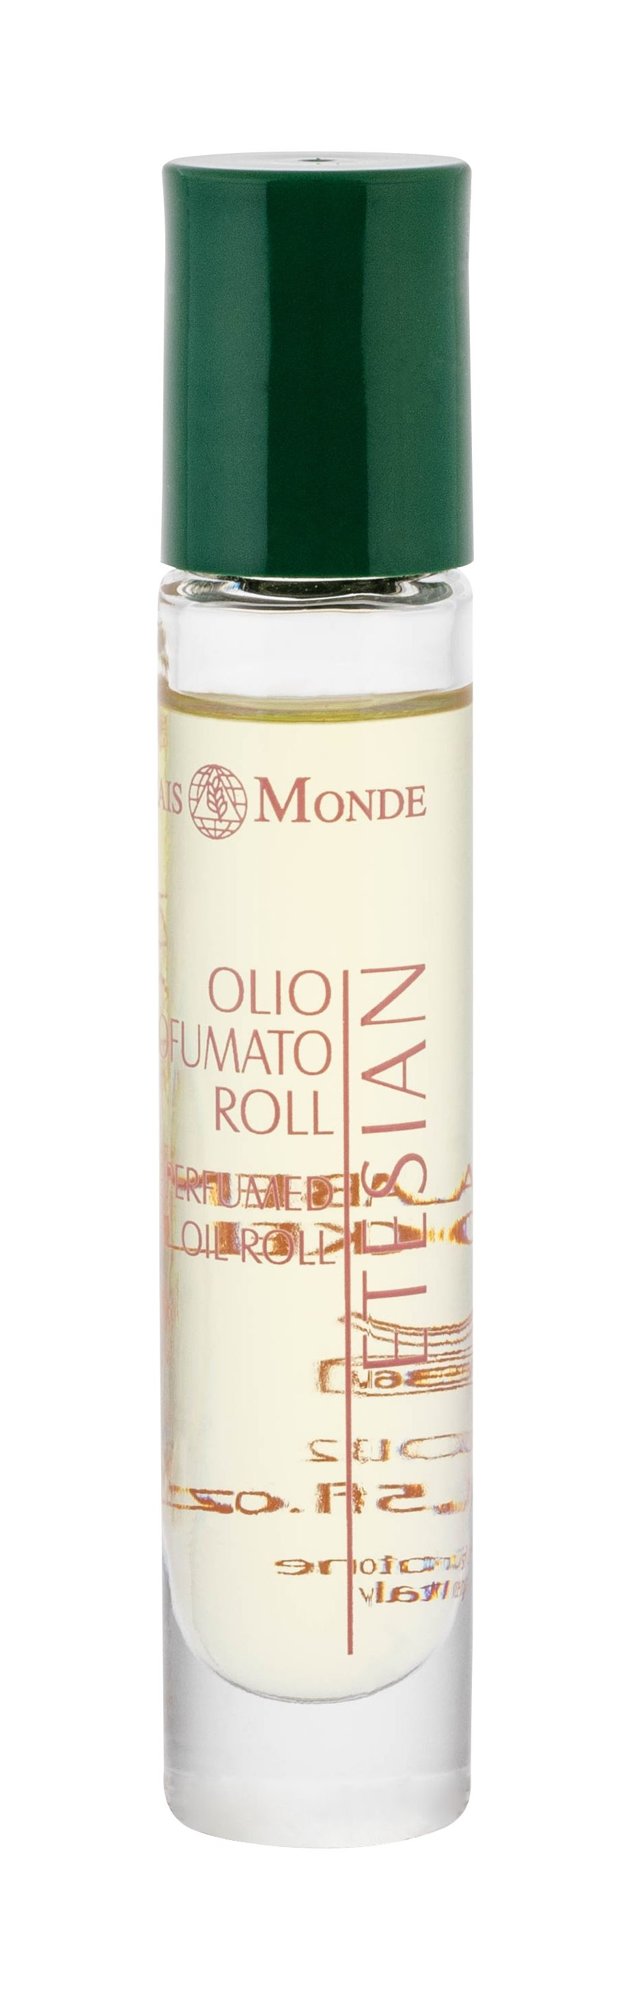 Frais Monde Etesian Perfumed Oil Roll